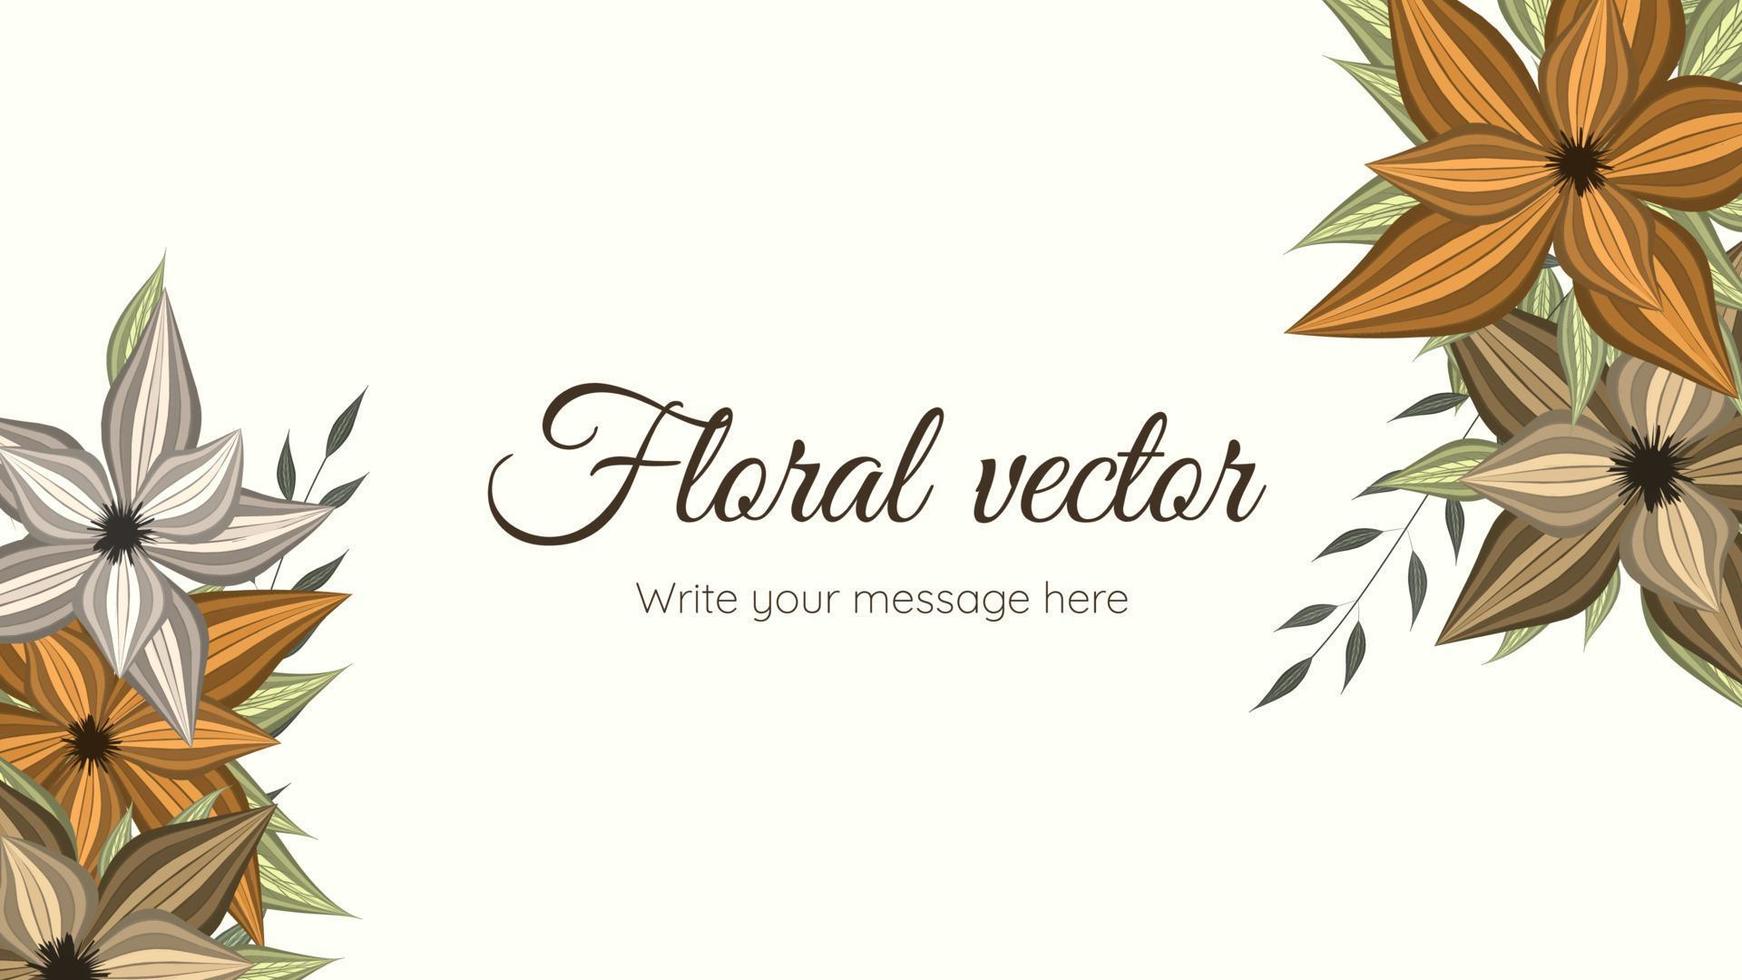 exquisita plantilla de fondo de flor floral abstracta con lugar de texto vector